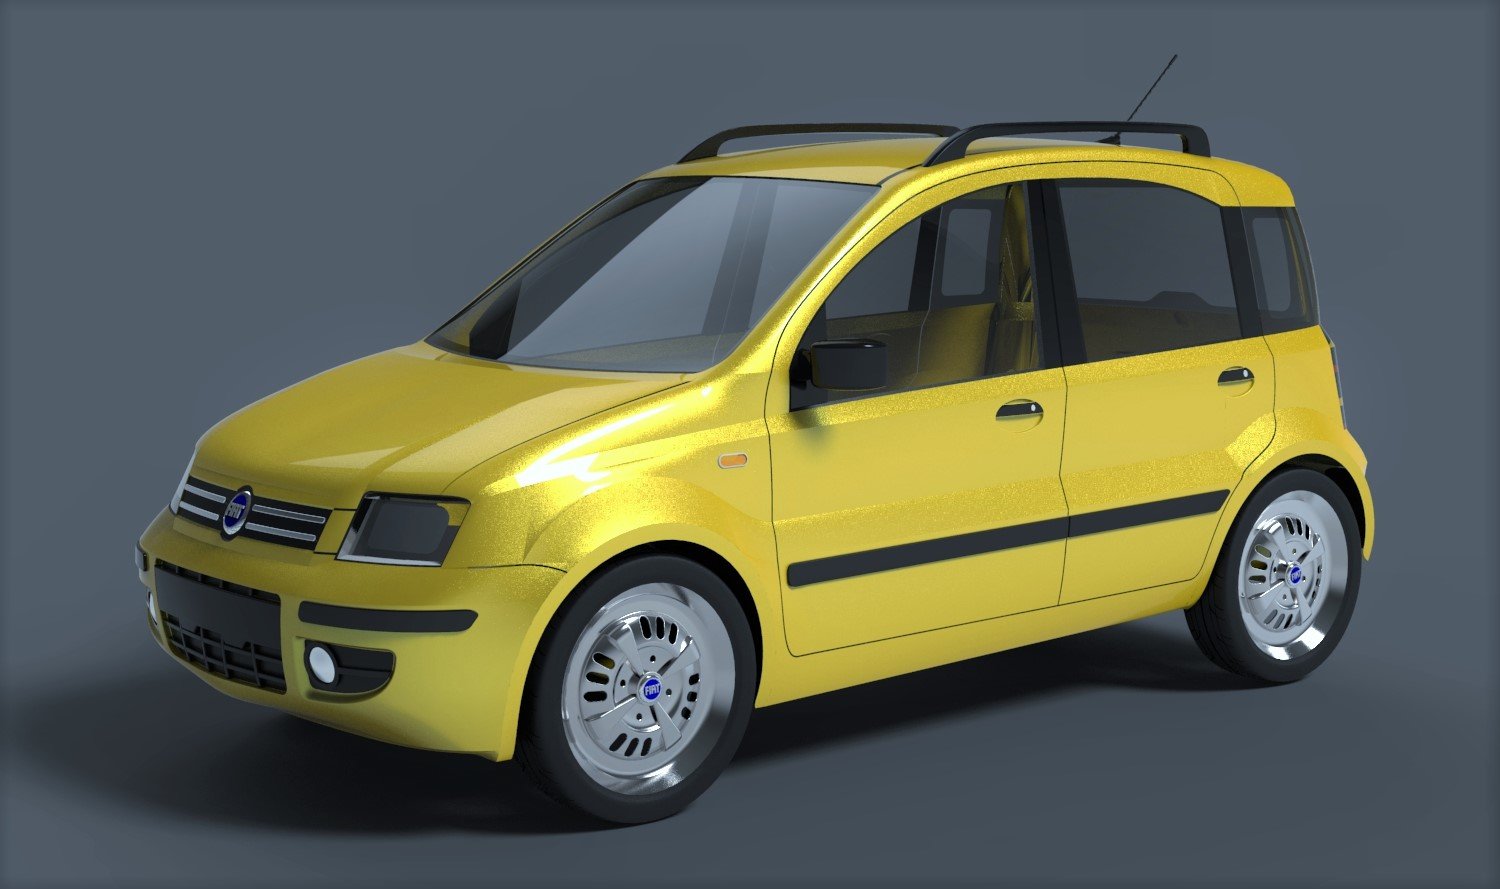 22 Yellow Fiat Panda Images, Stock Photos, 3D objects, & Vectors